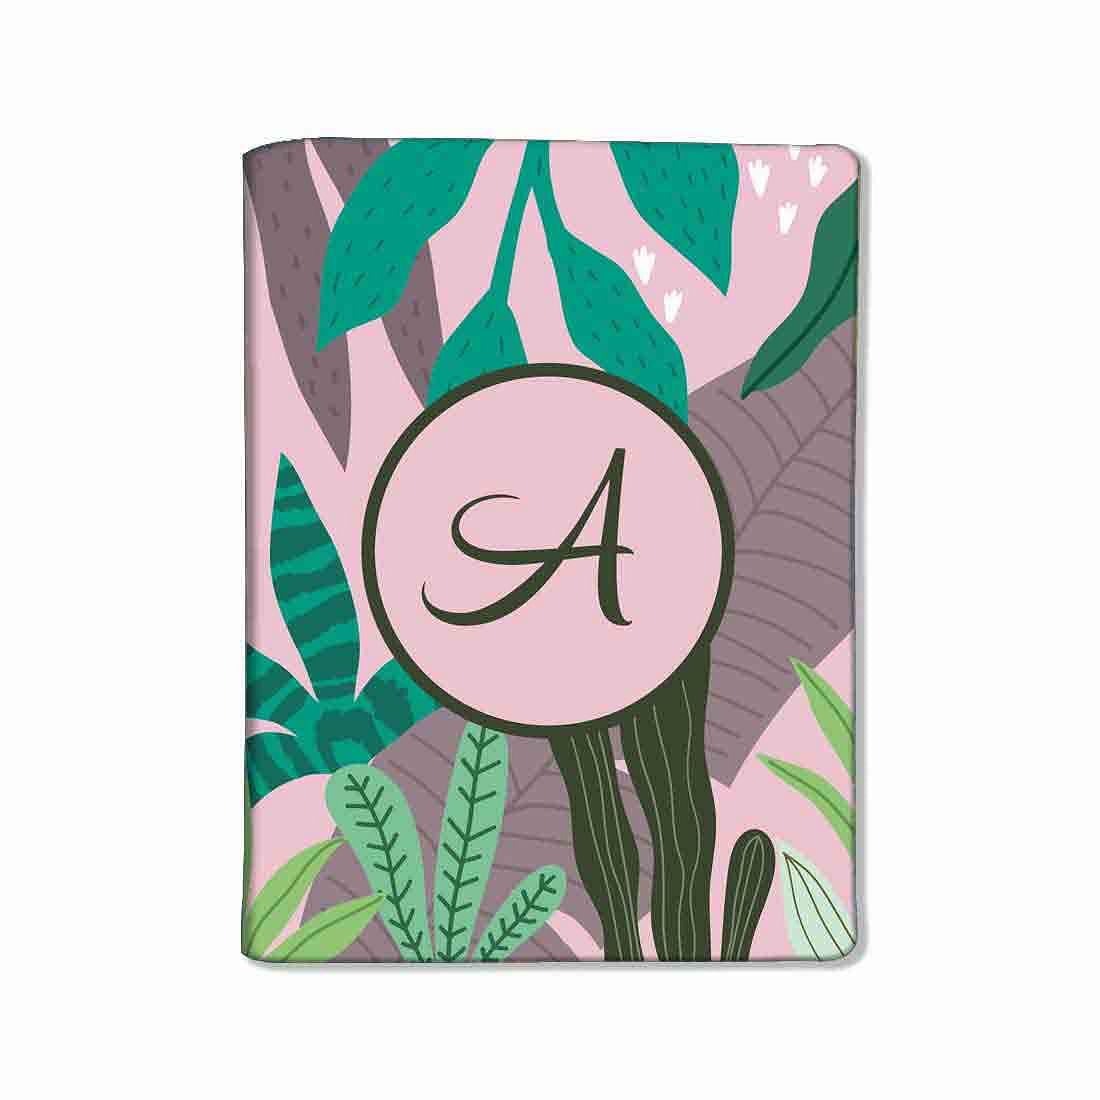 Custom Name Passport Cover  -Pink Tropical Vibes Nutcase